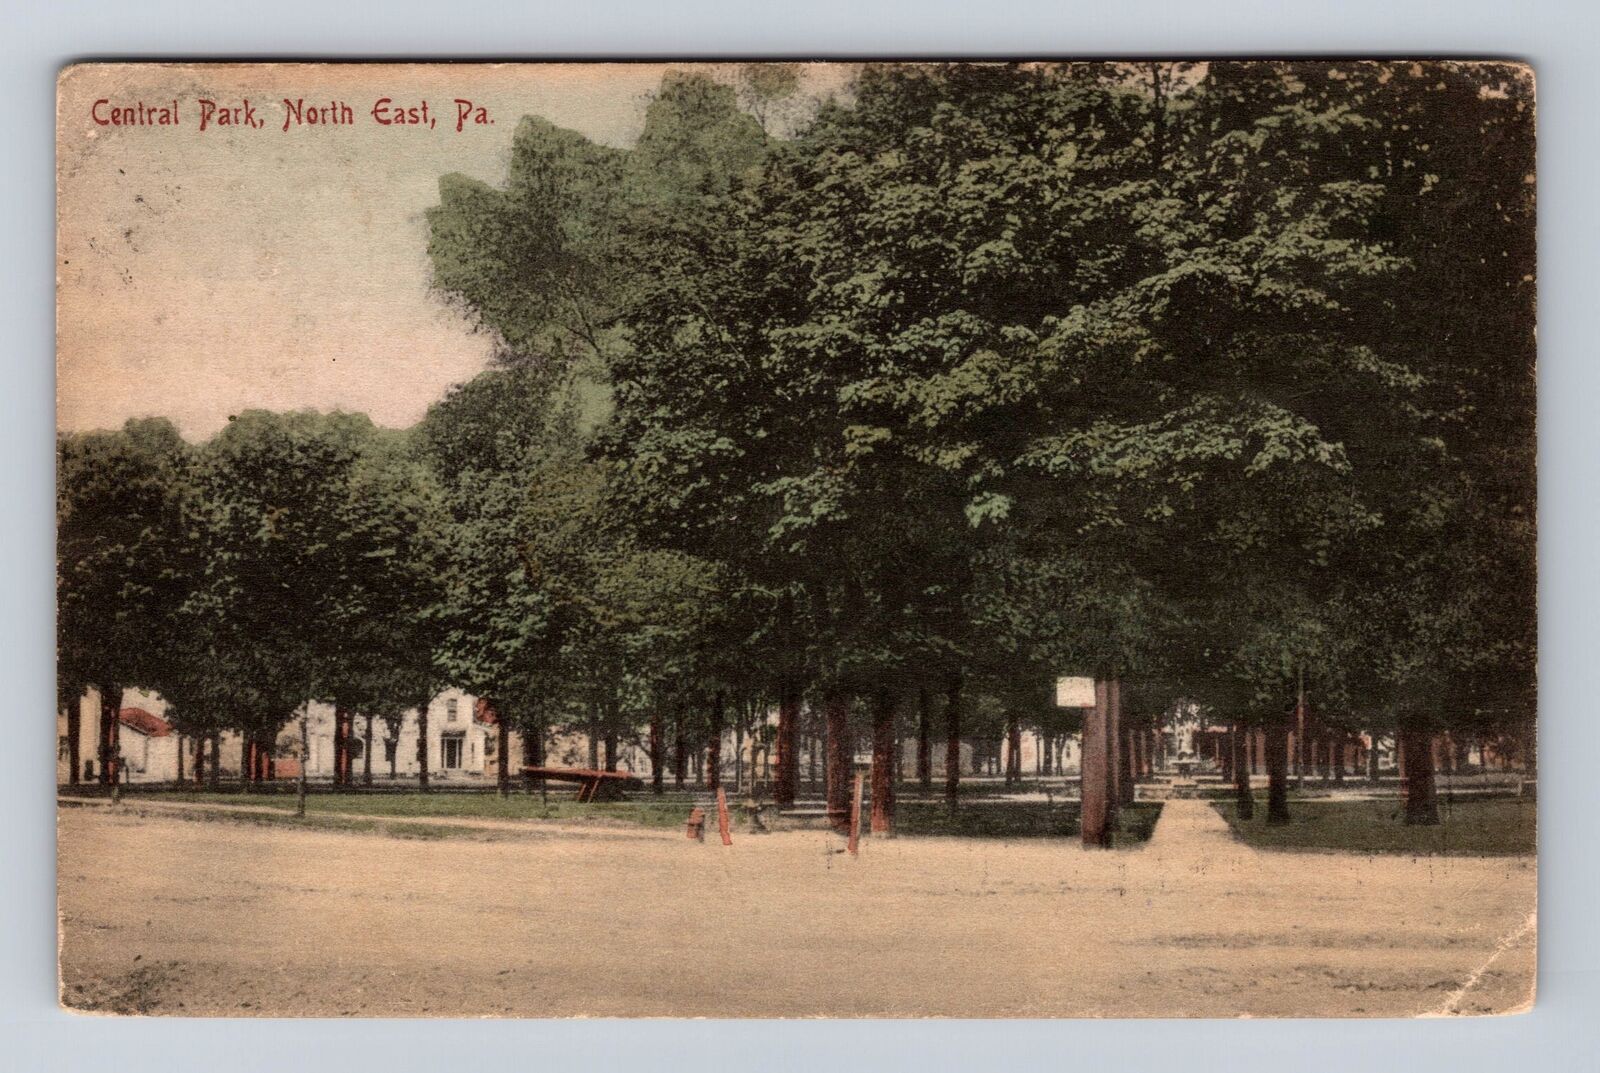 North East PA-Pennsylvania, Scenic Central Park, Vintage c1910 Postcard